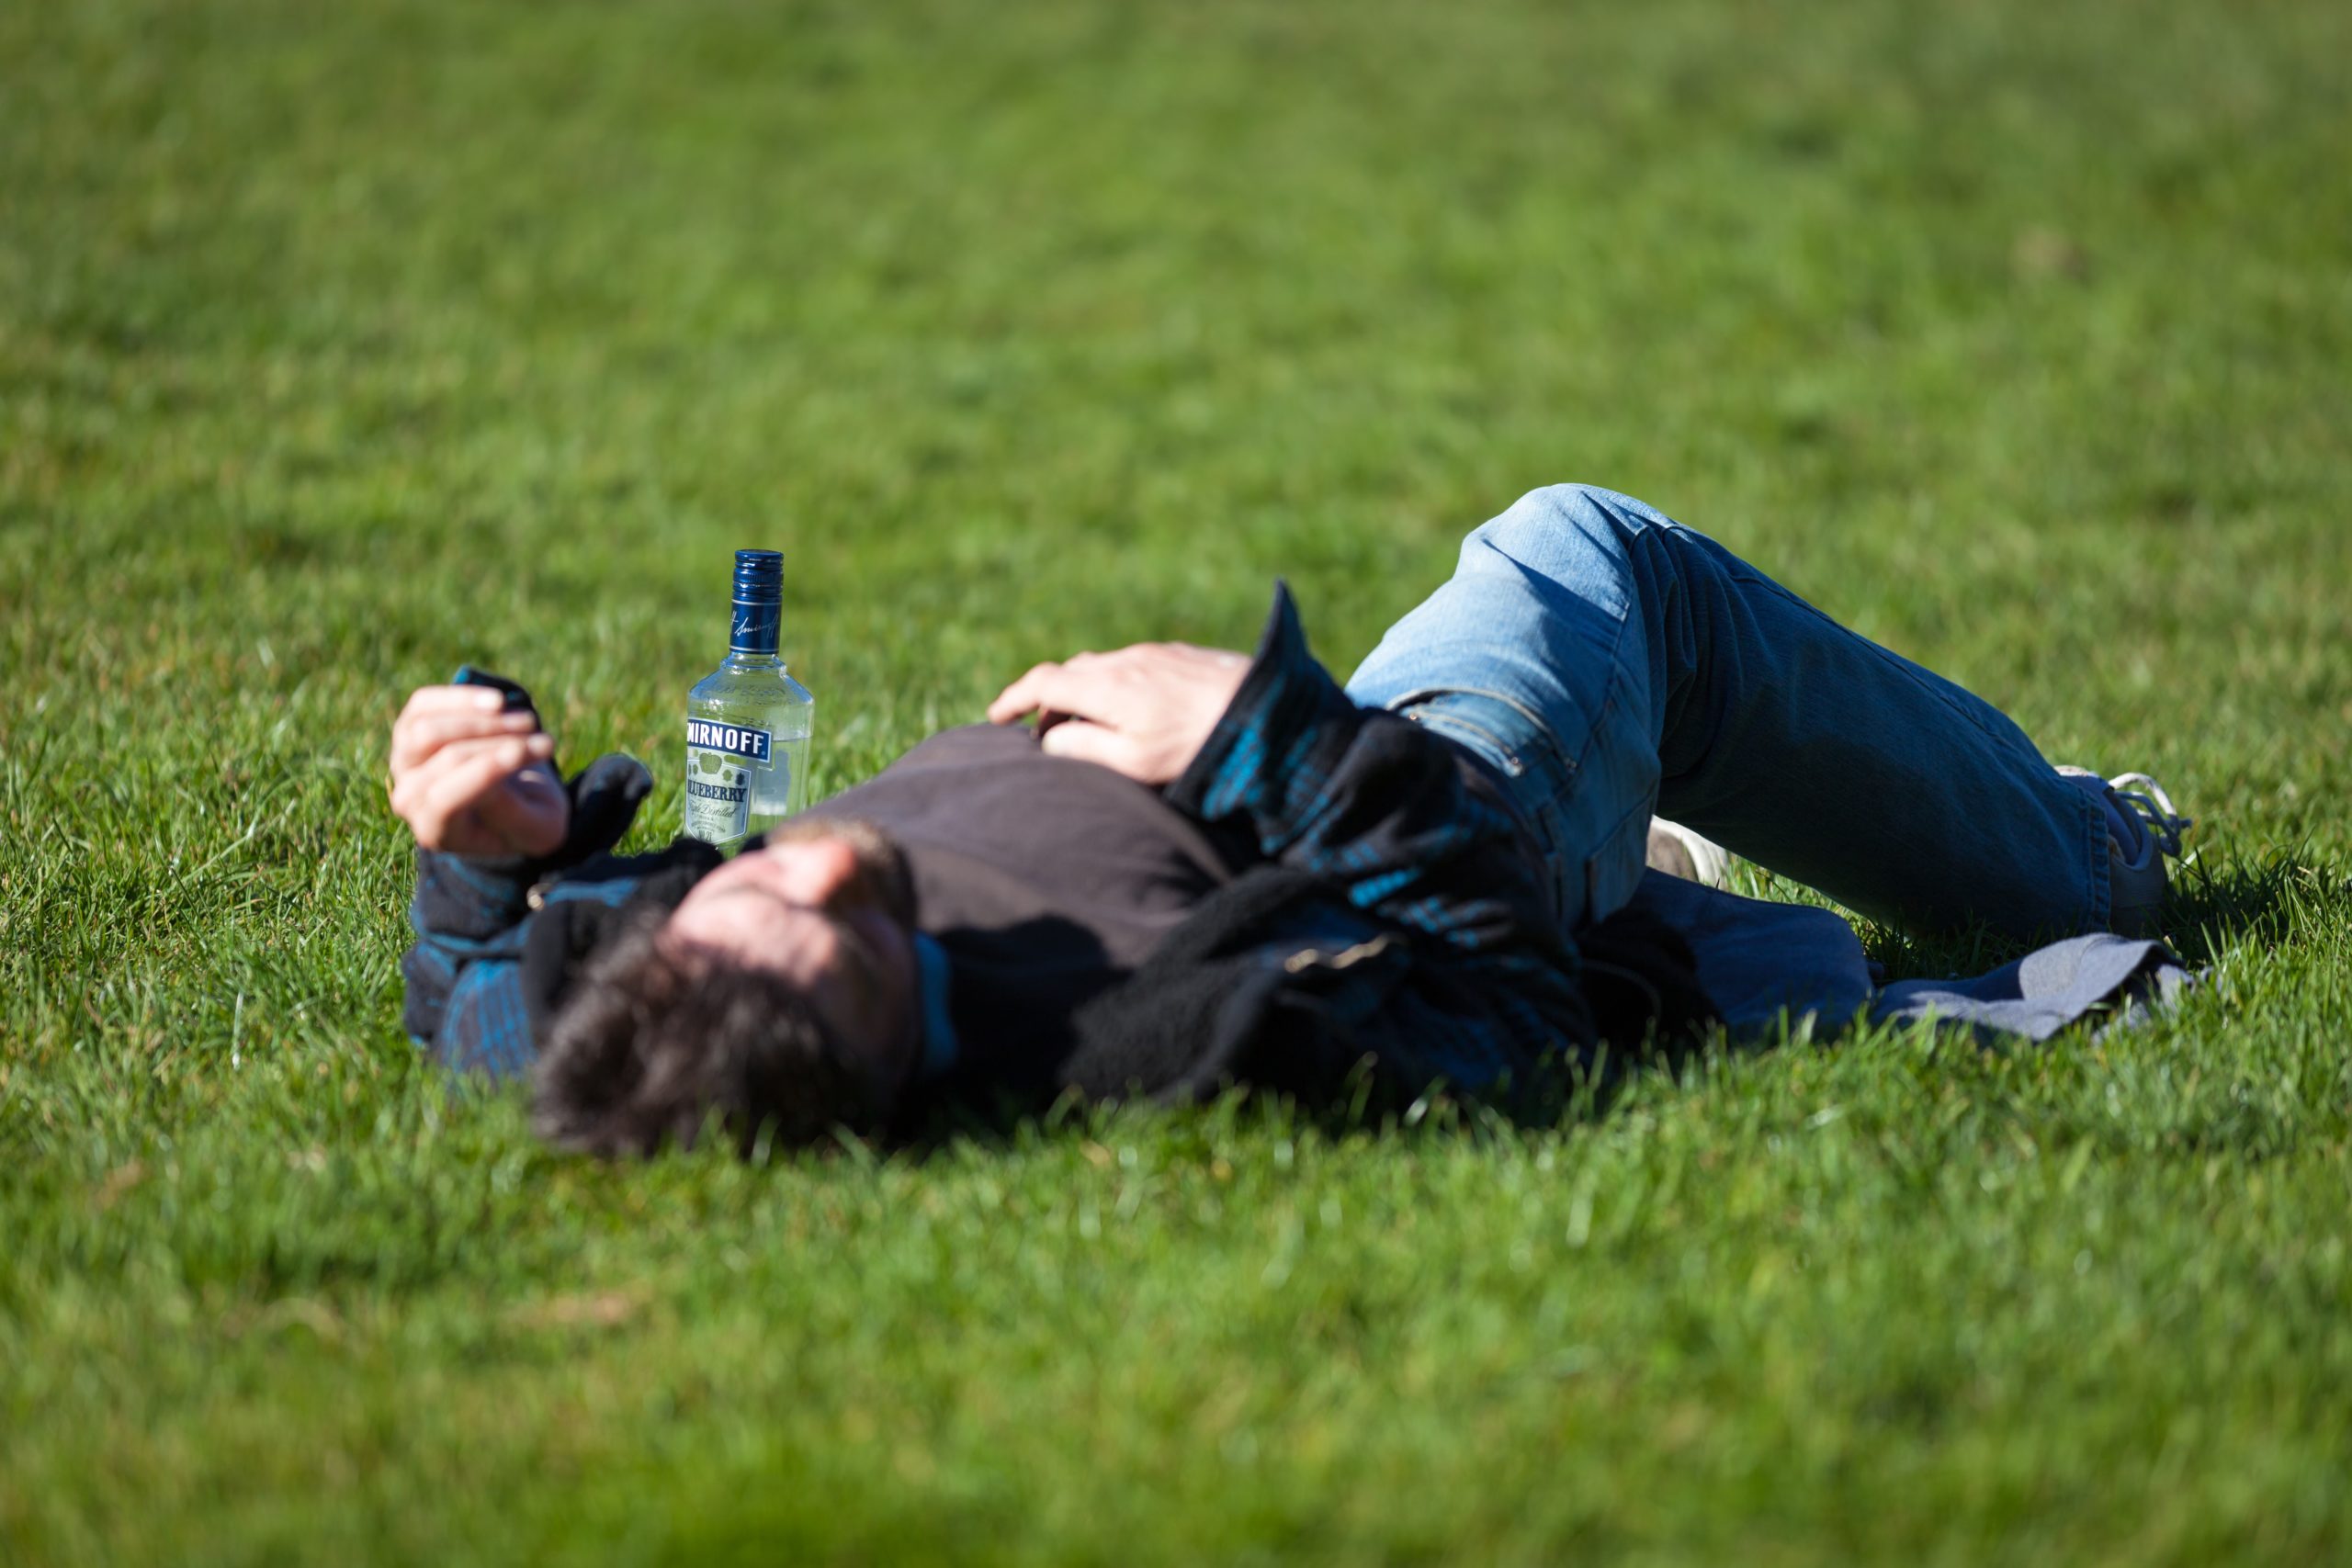 A man lying on a grass field